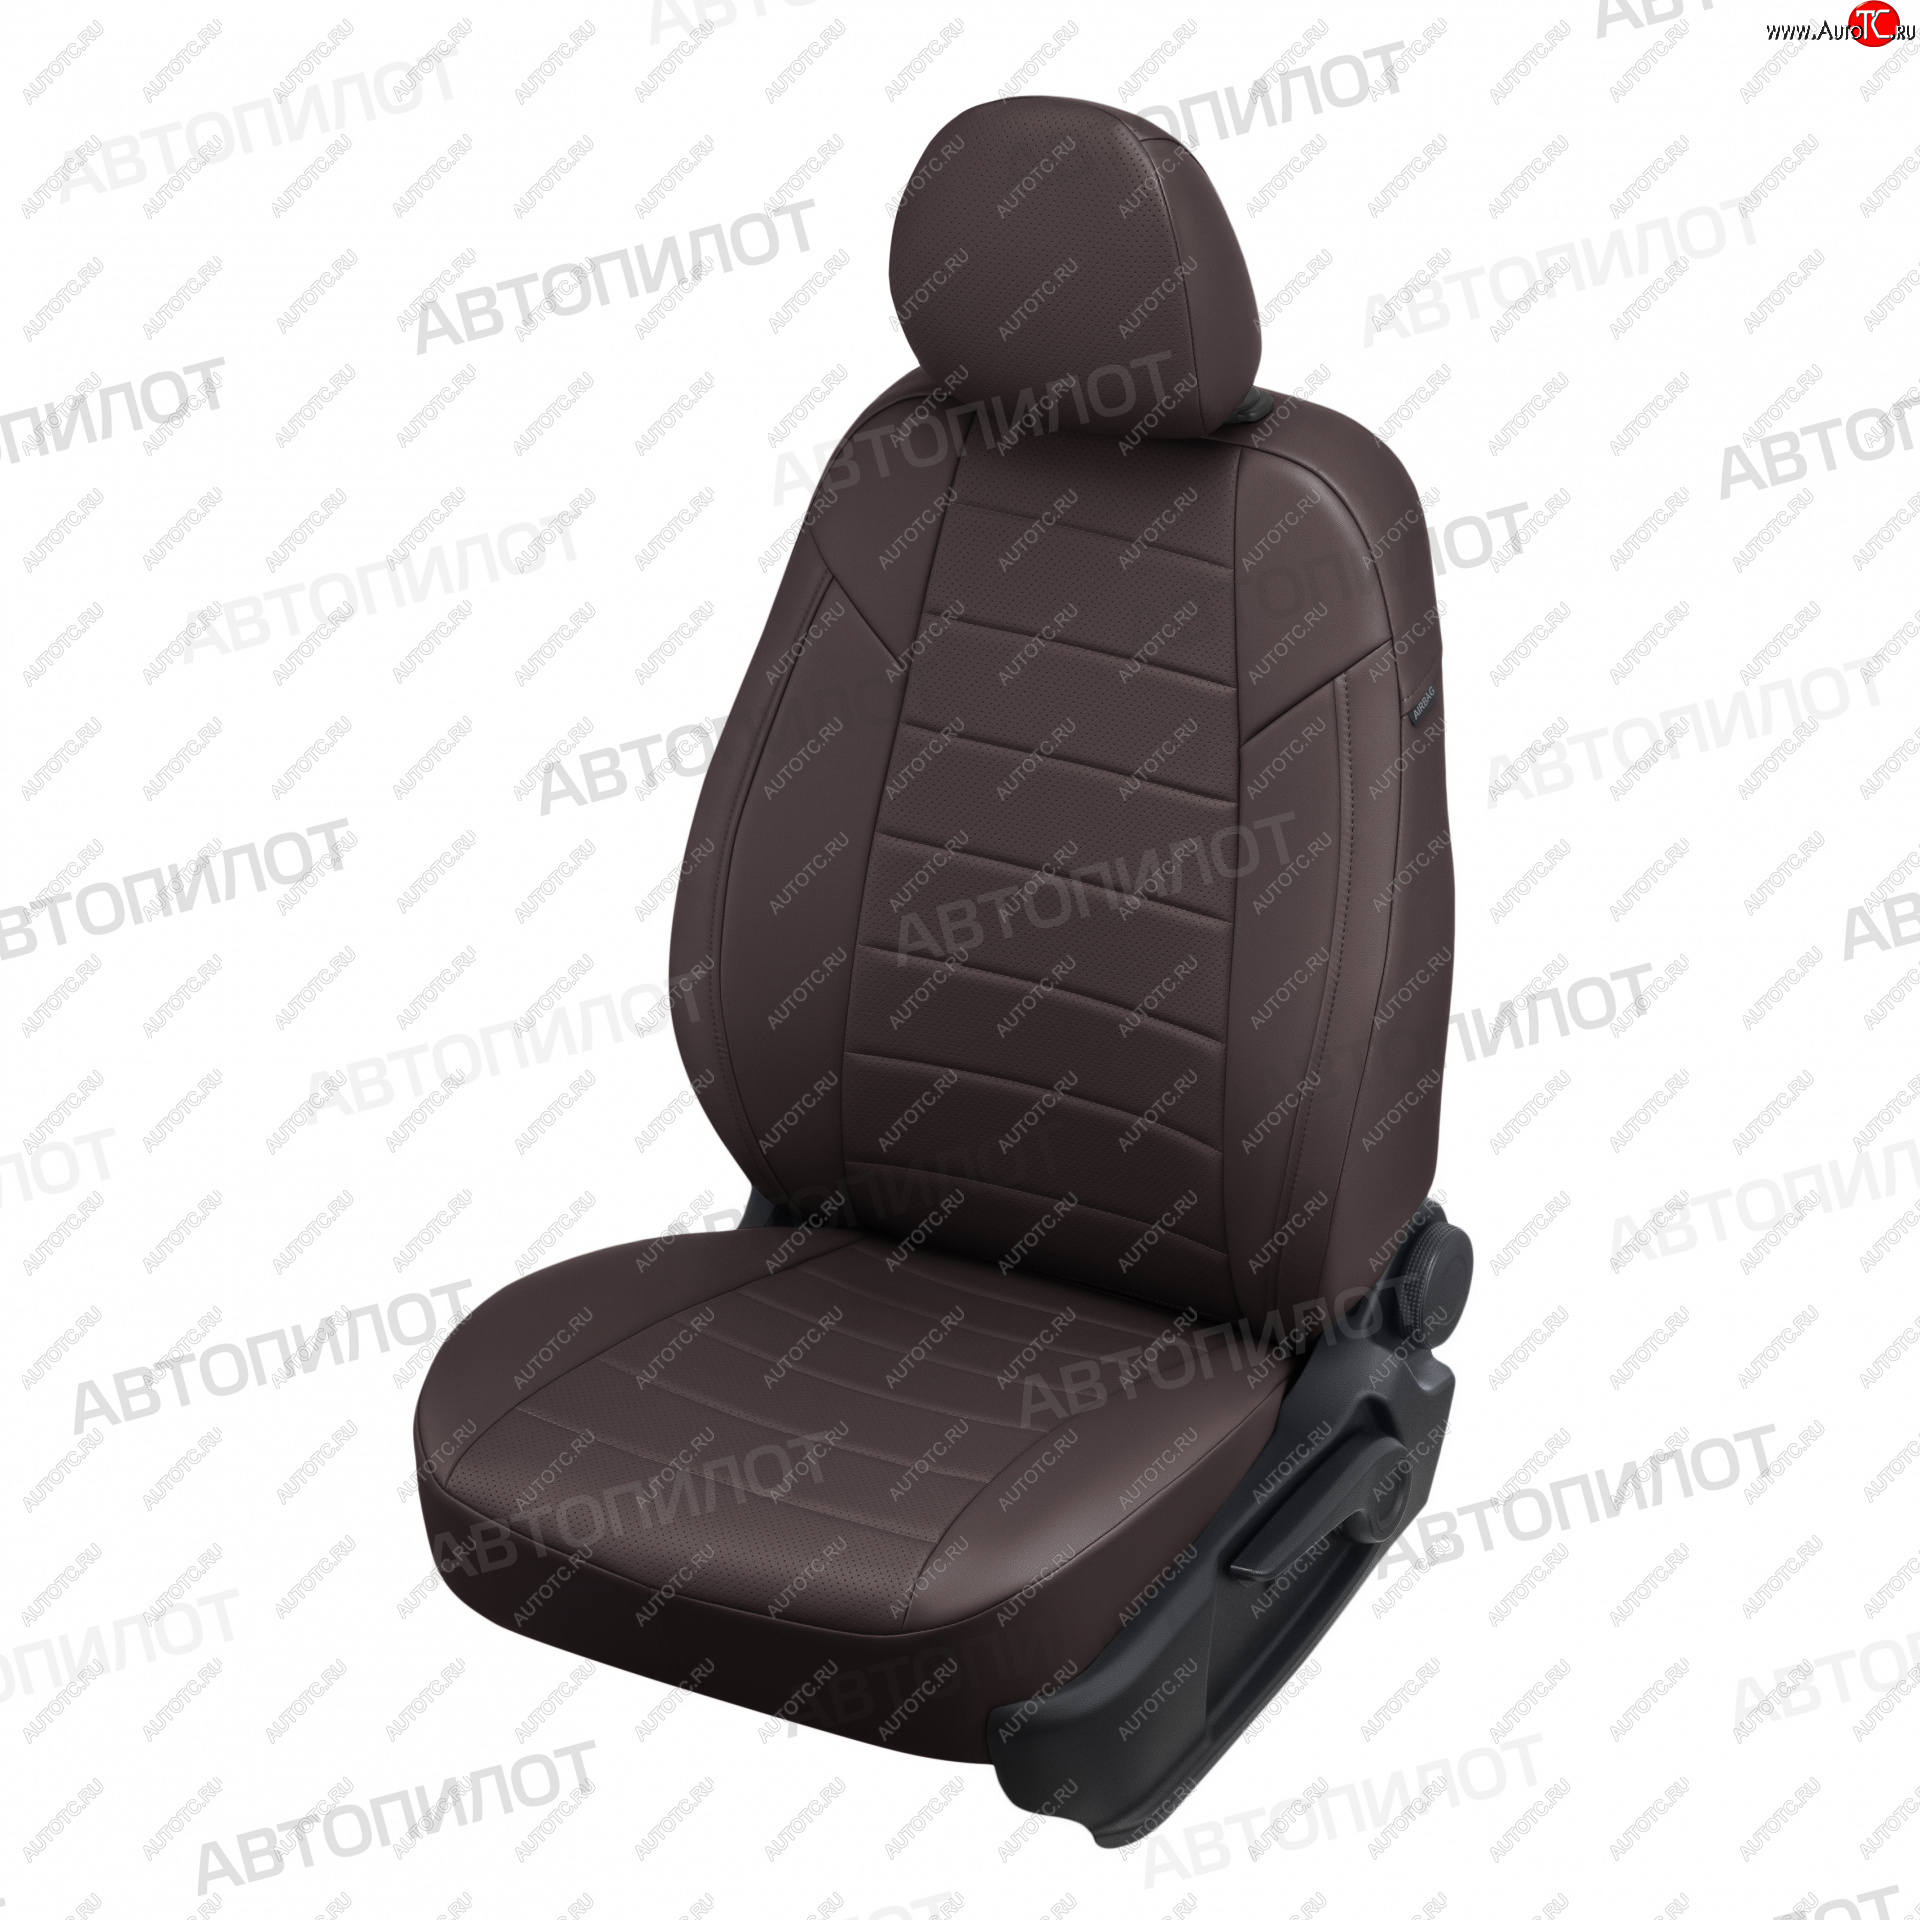 13 849 р. Чехлы сидений (5 мест, экокожа) Автопилот  Ford Galaxy  2 (2006-2015) (шоколад)